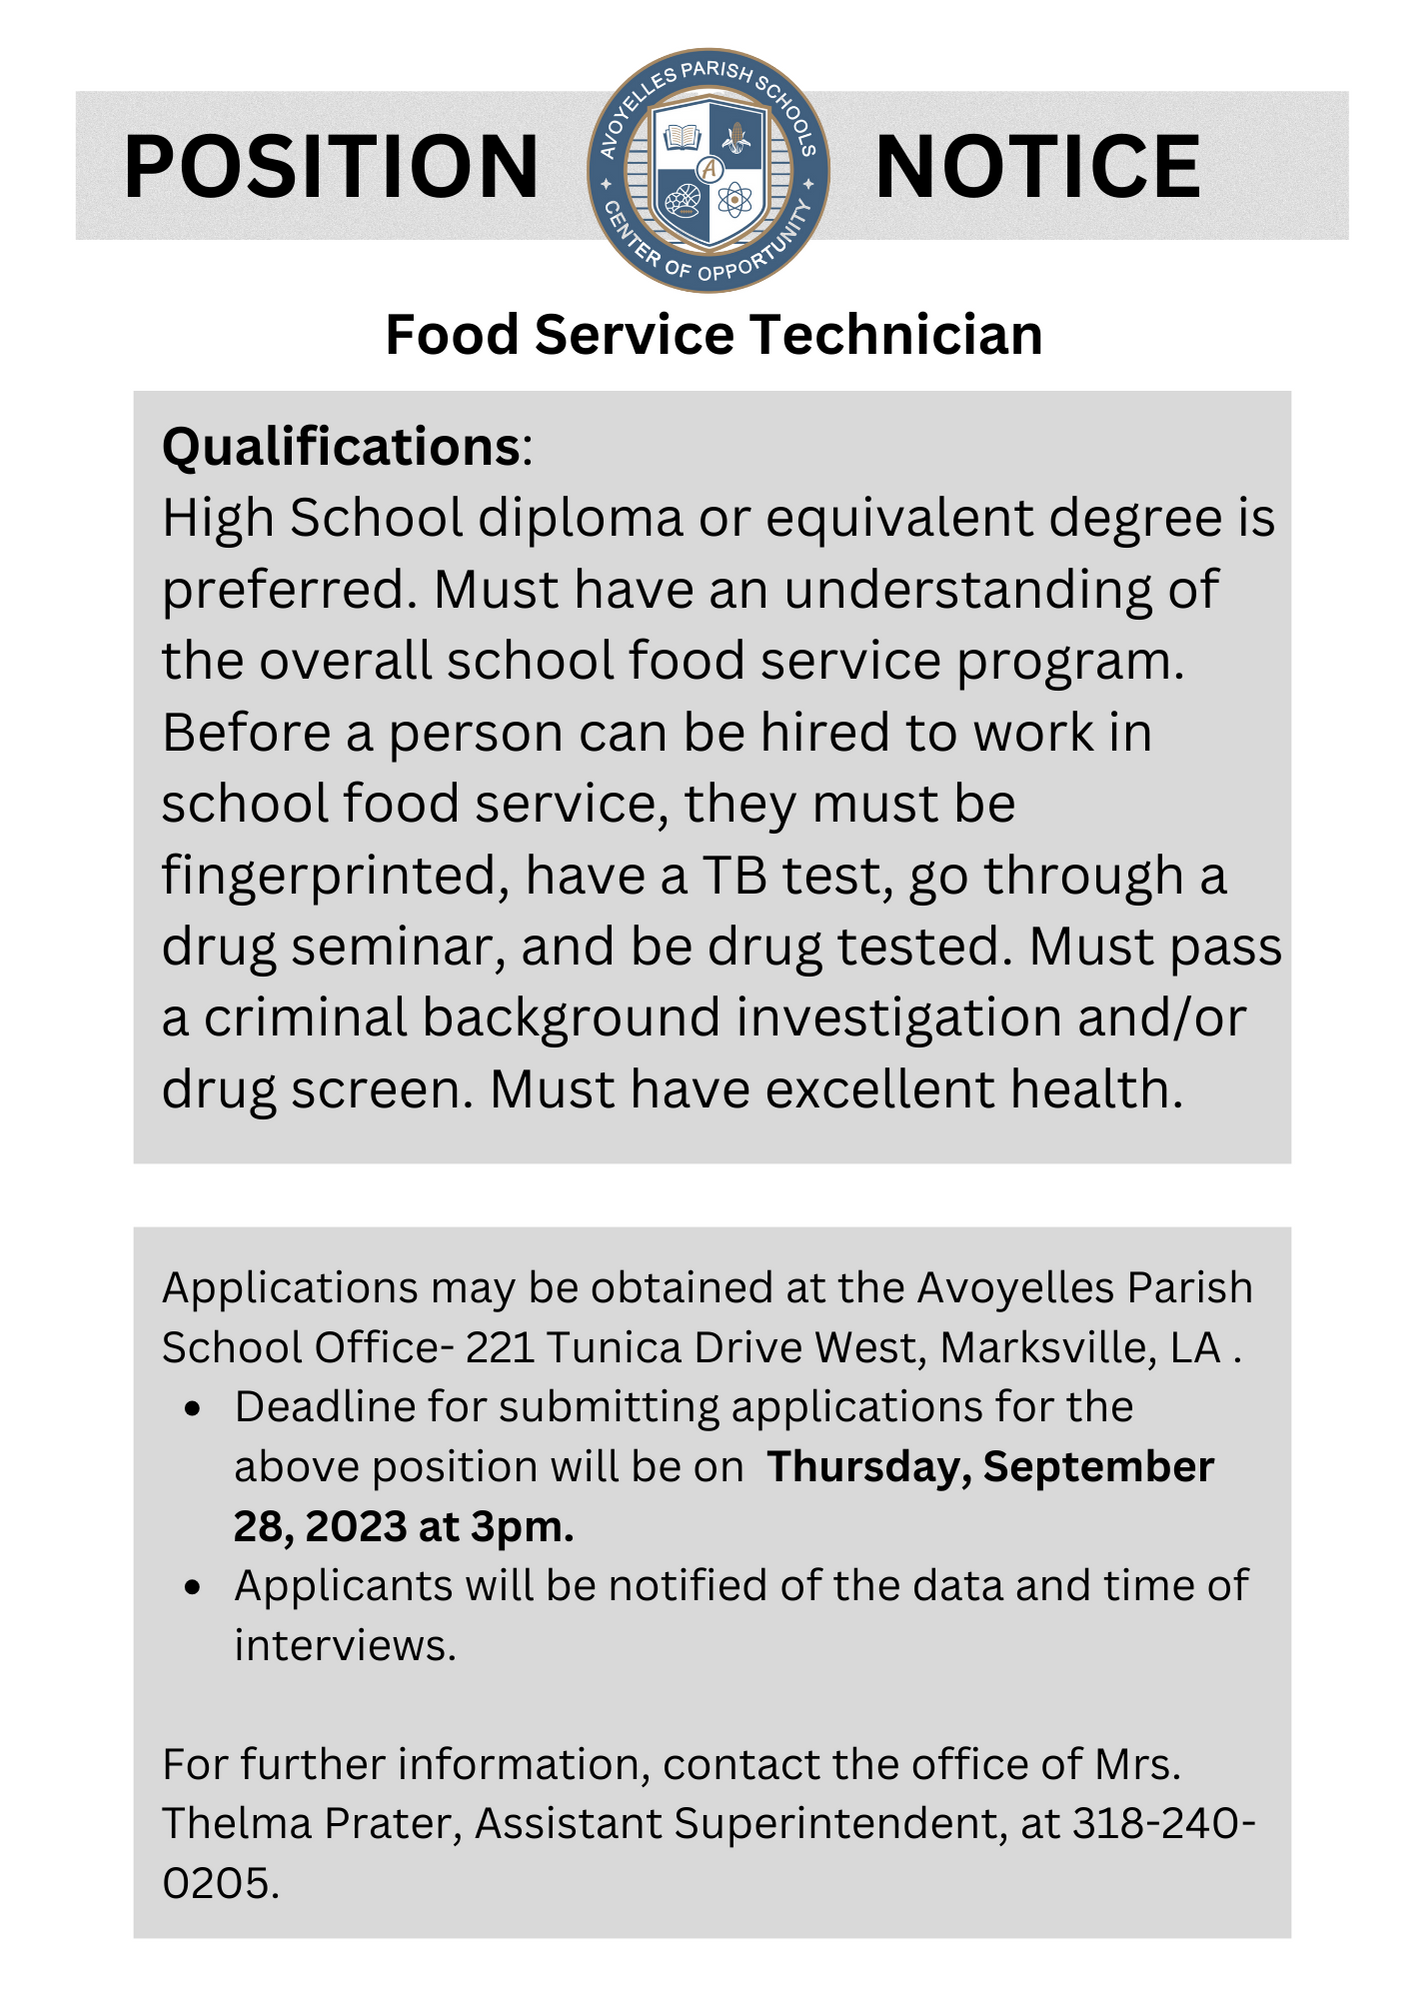 Food Service Technician Job Vacancy